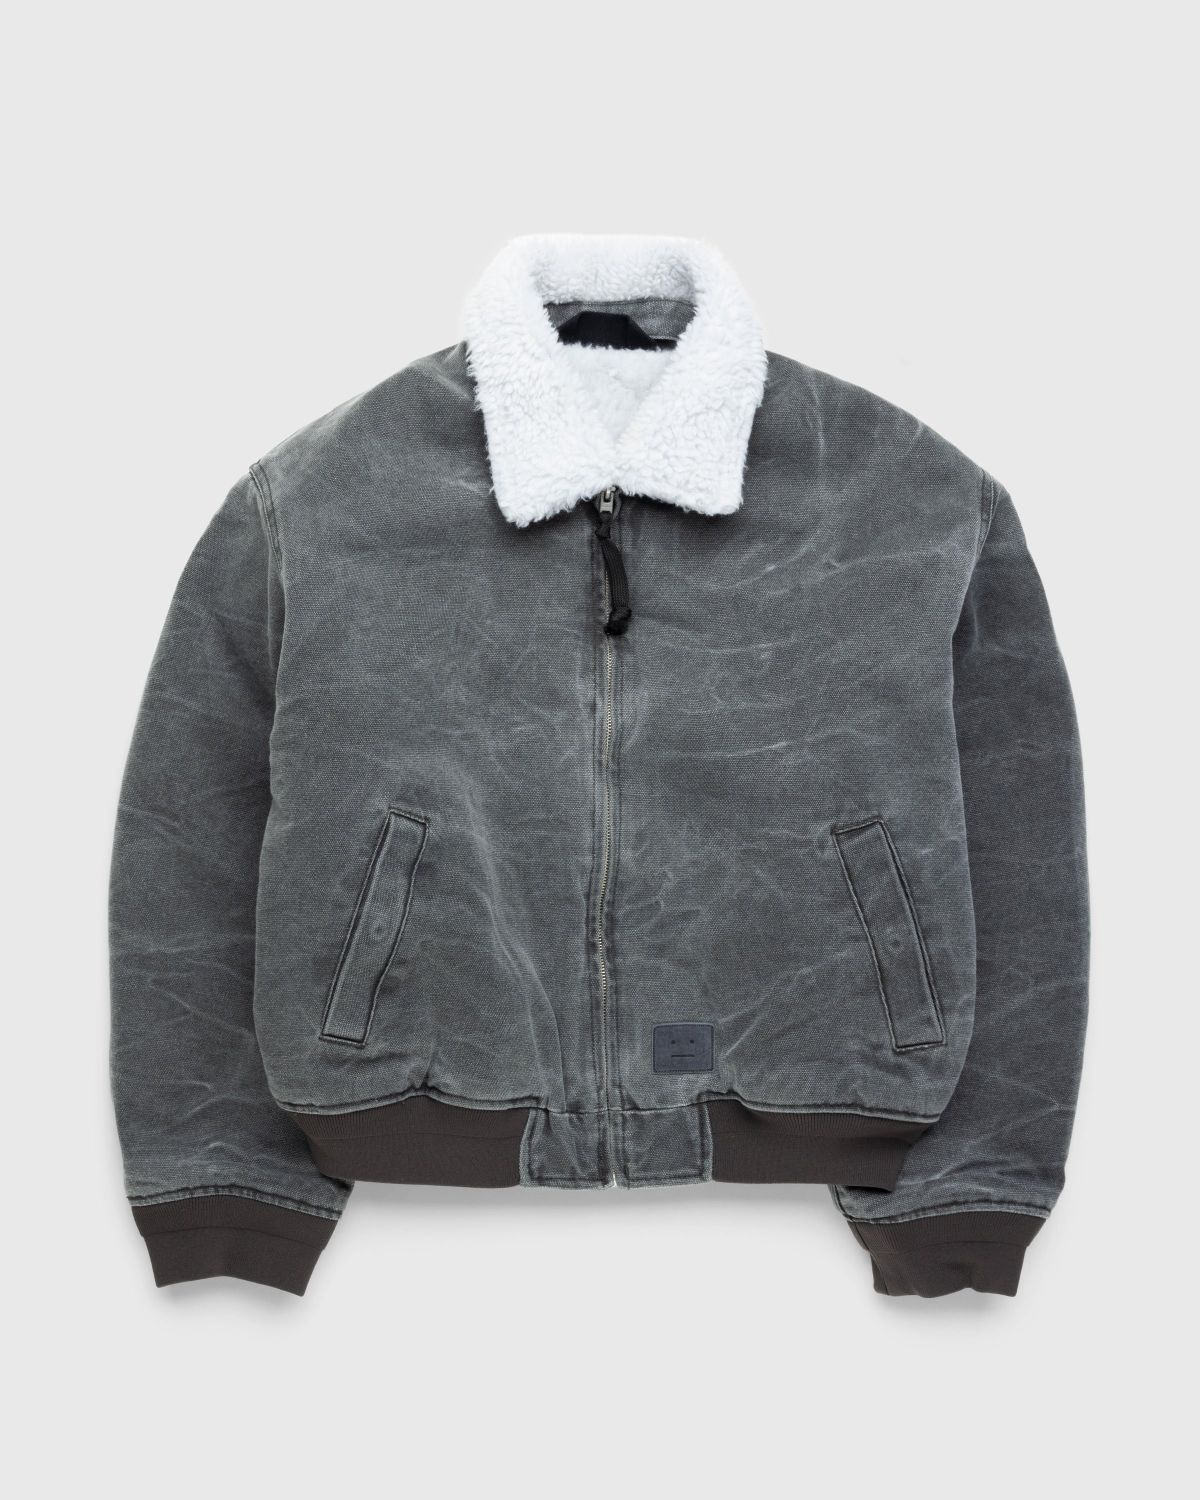 Acne Studios – Cotton Canvas Bomber Jacket Grey - Bomber Jackets - Grey - Image 1